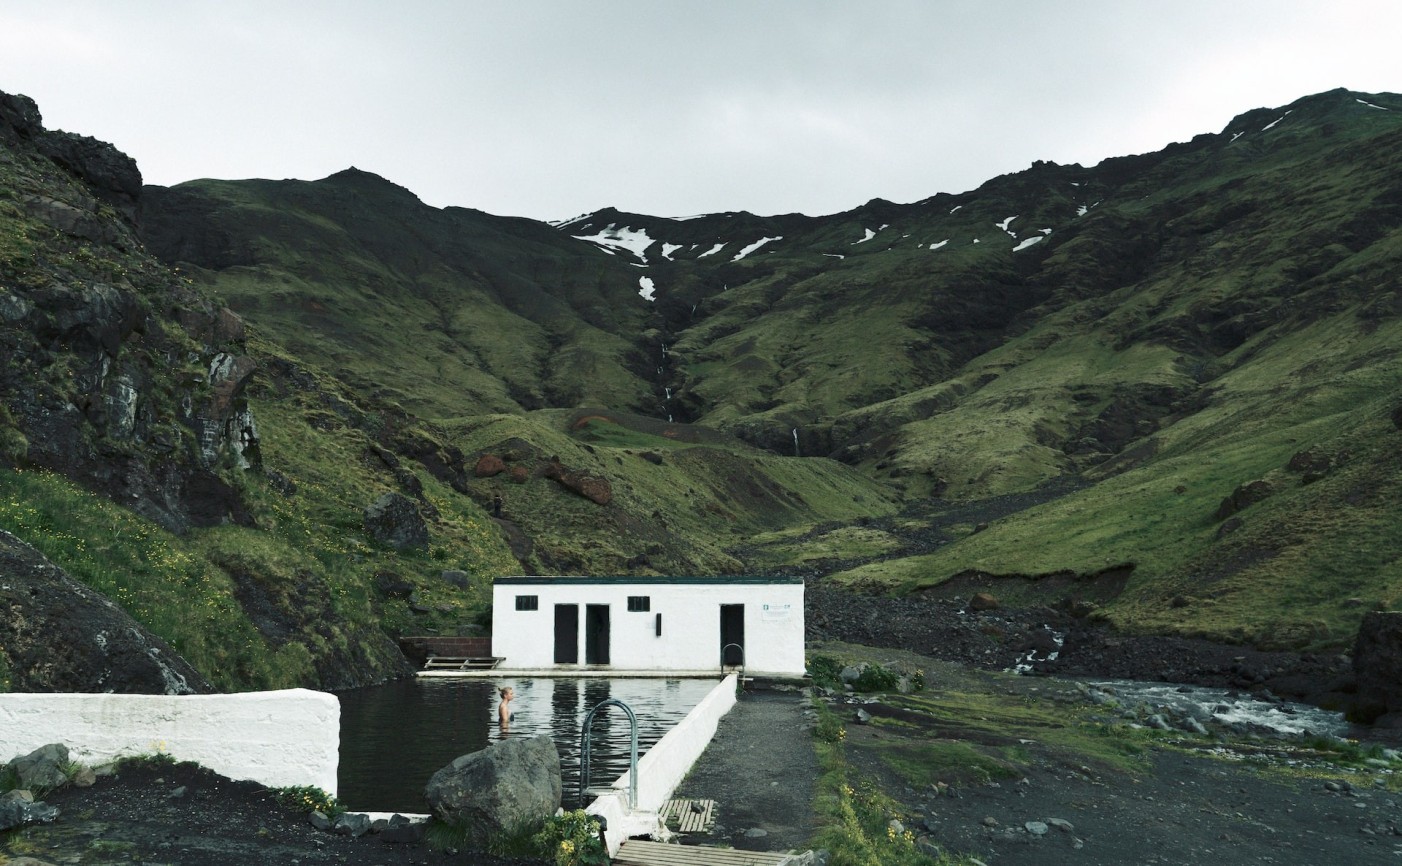 Seljavallalaug Izland termálmedence